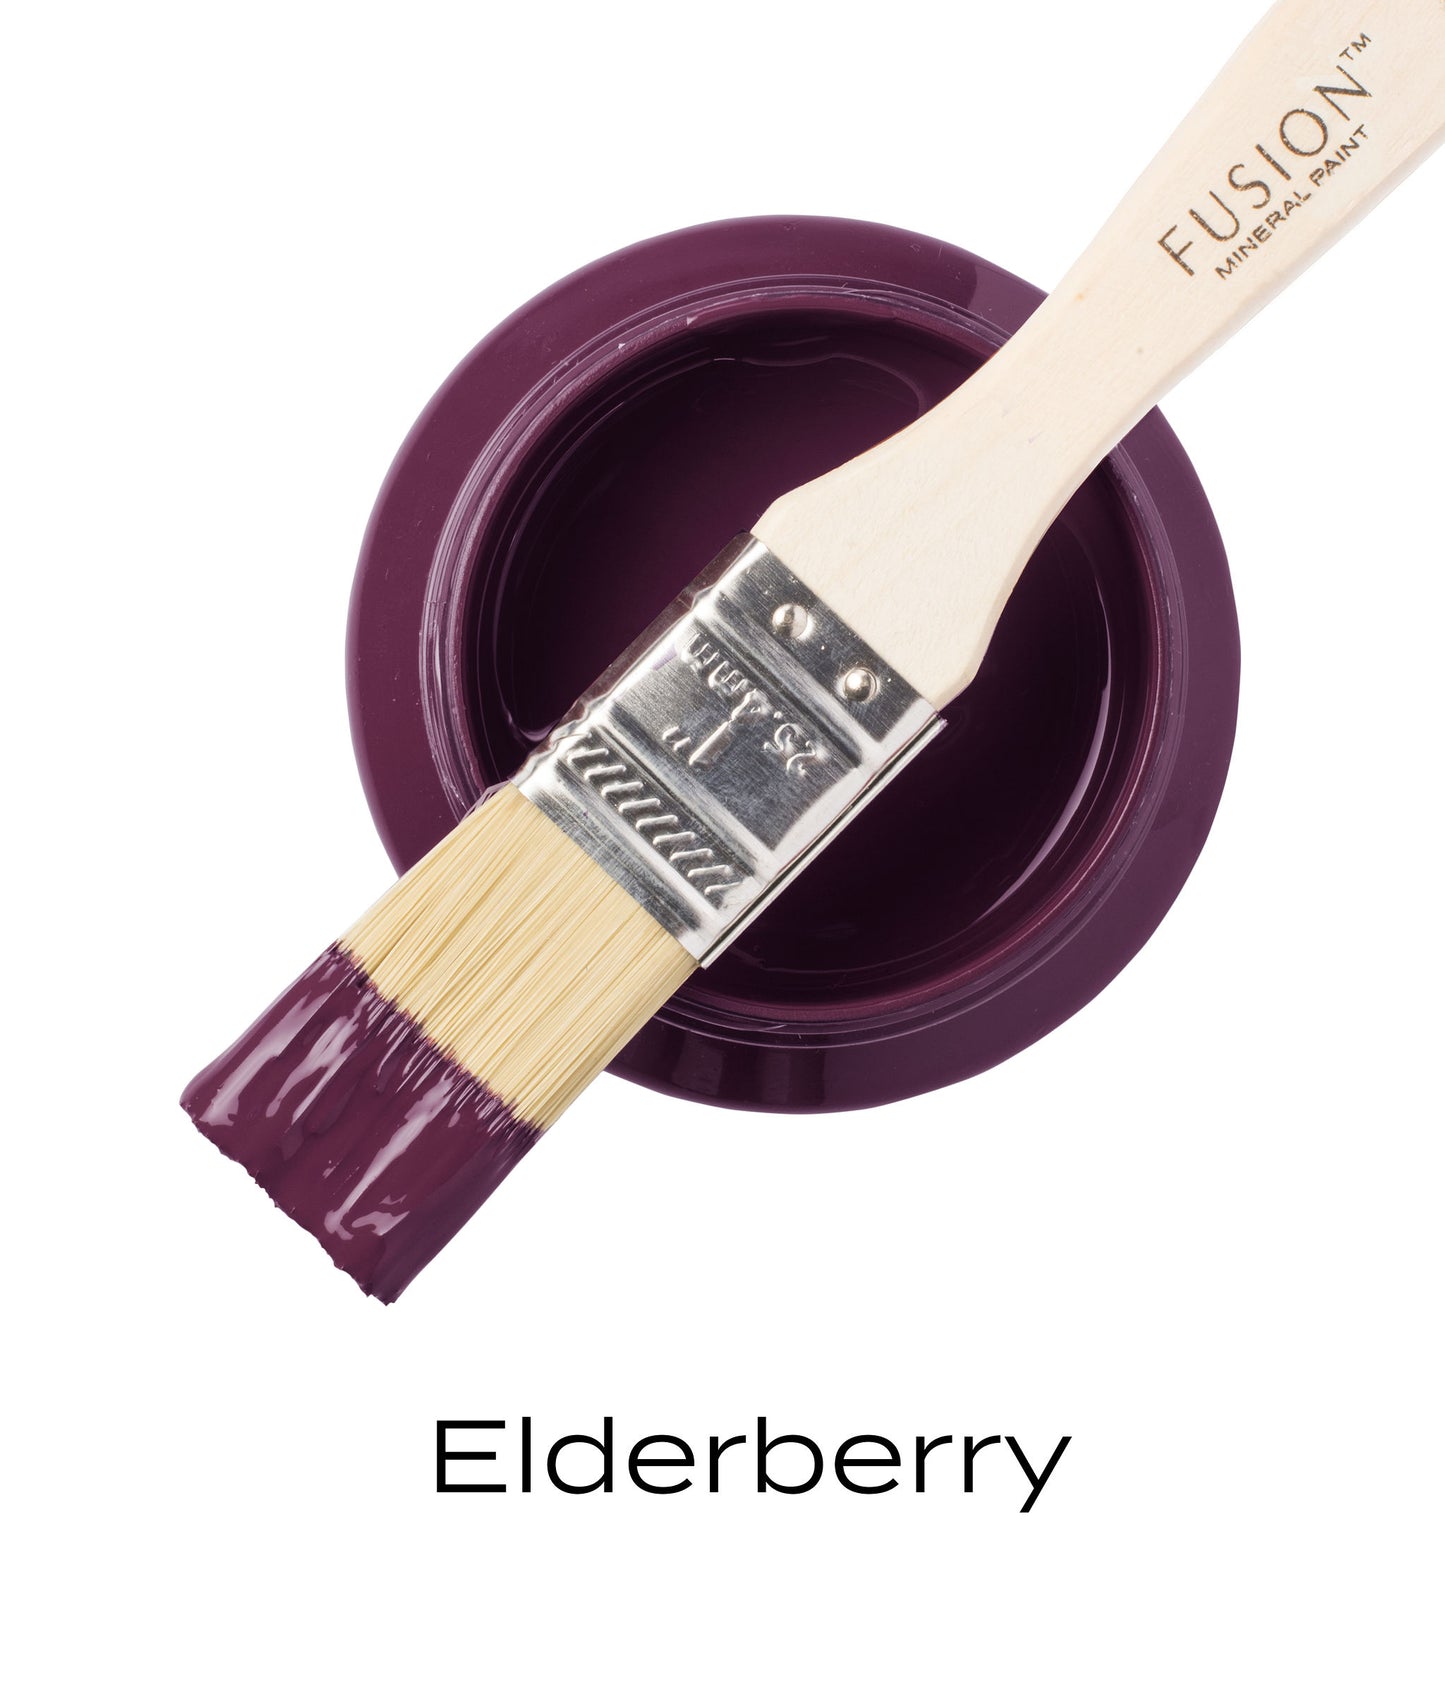 Elderberry - Fusion Mineral Paint